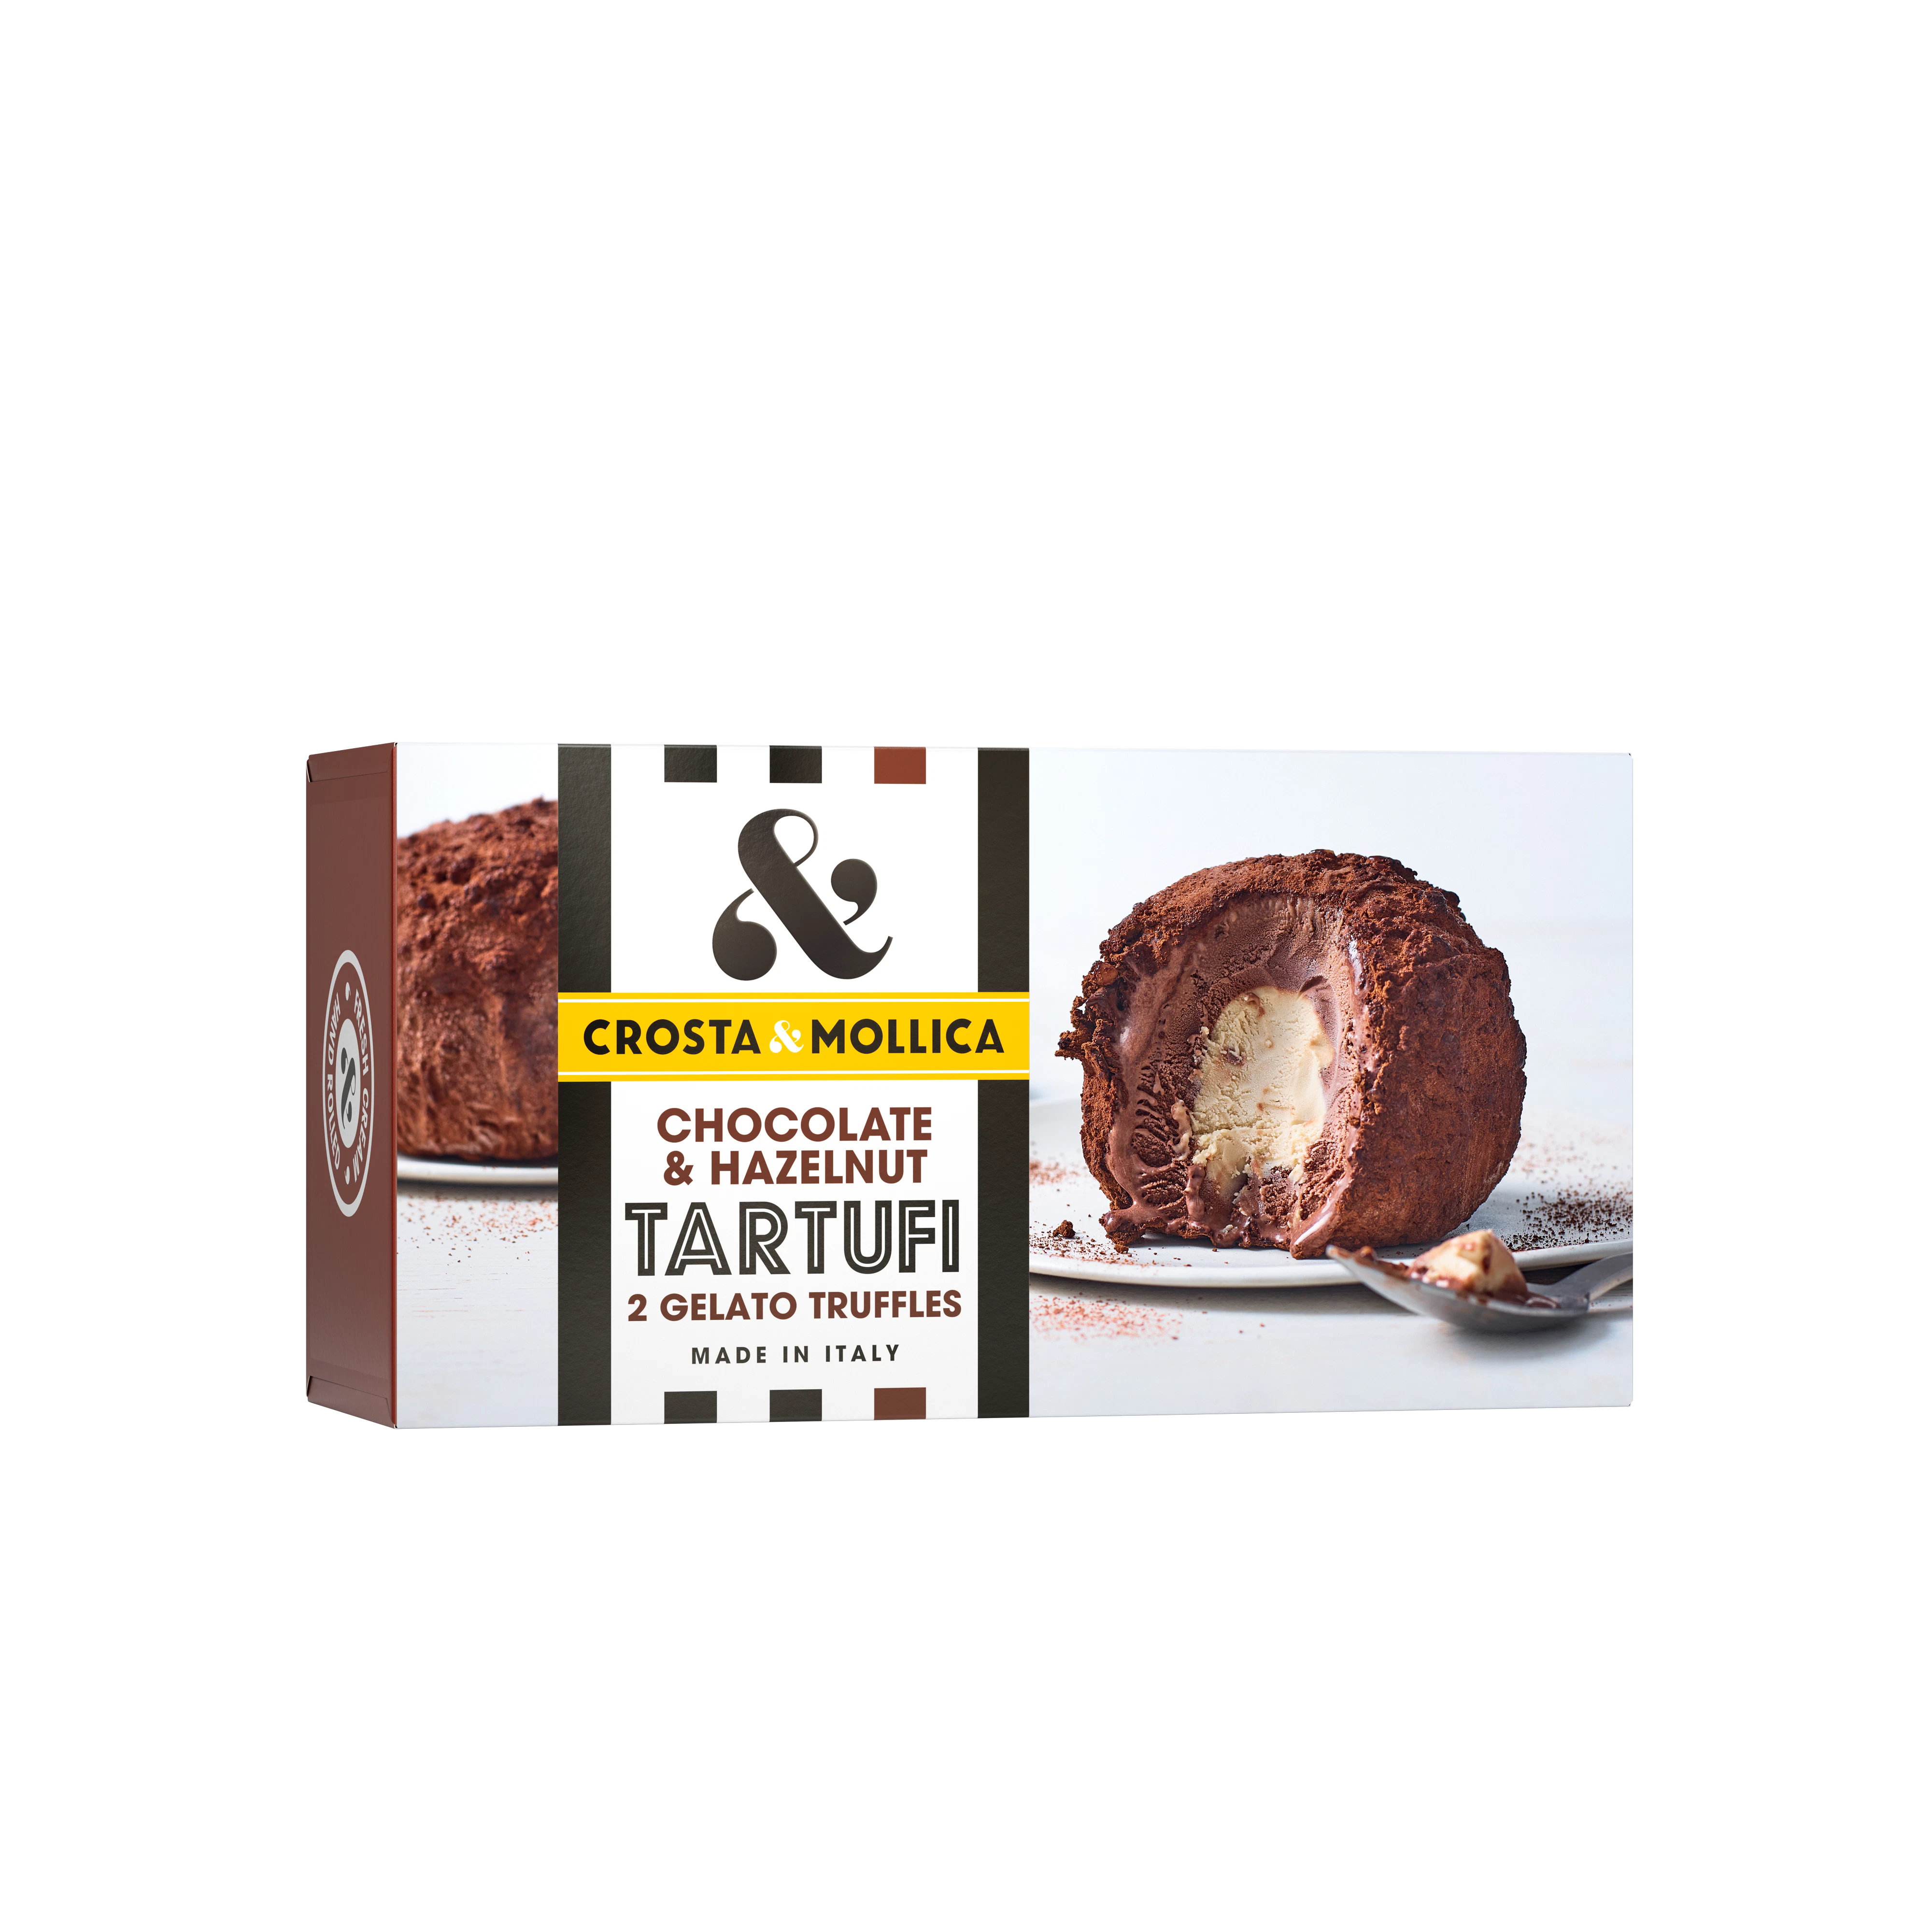 Chocolate & Hazelnut Tartufi packaging.